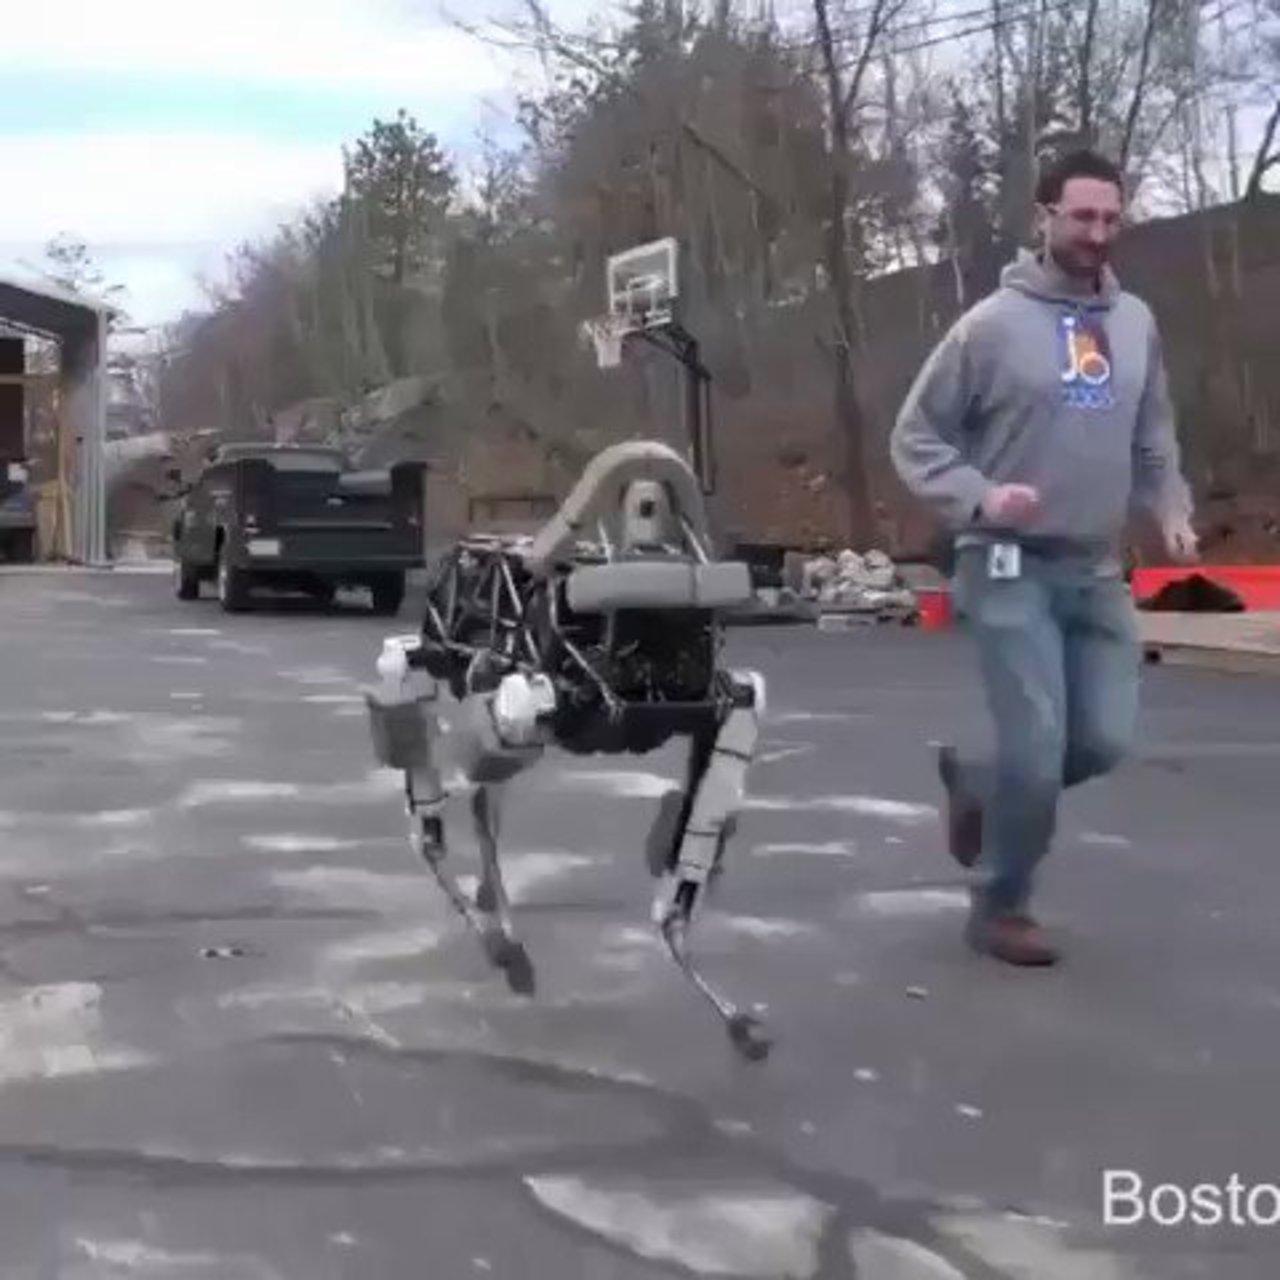 A companion #Robot For Running in the morning.  By @BostonDynamics  #AI #RunningDay #Socialmedia #Machinelearning #Robotic #Tech #Innovation #IoT Cc: @labordeolivier @robmay70 @gvalan @jdelacruz_IoT @ArkangelScrap @DrJDrooghaag @AghiathChbib @realColinMac @archonsec @NeiraOsci https://t.co/CABHSLgIVw